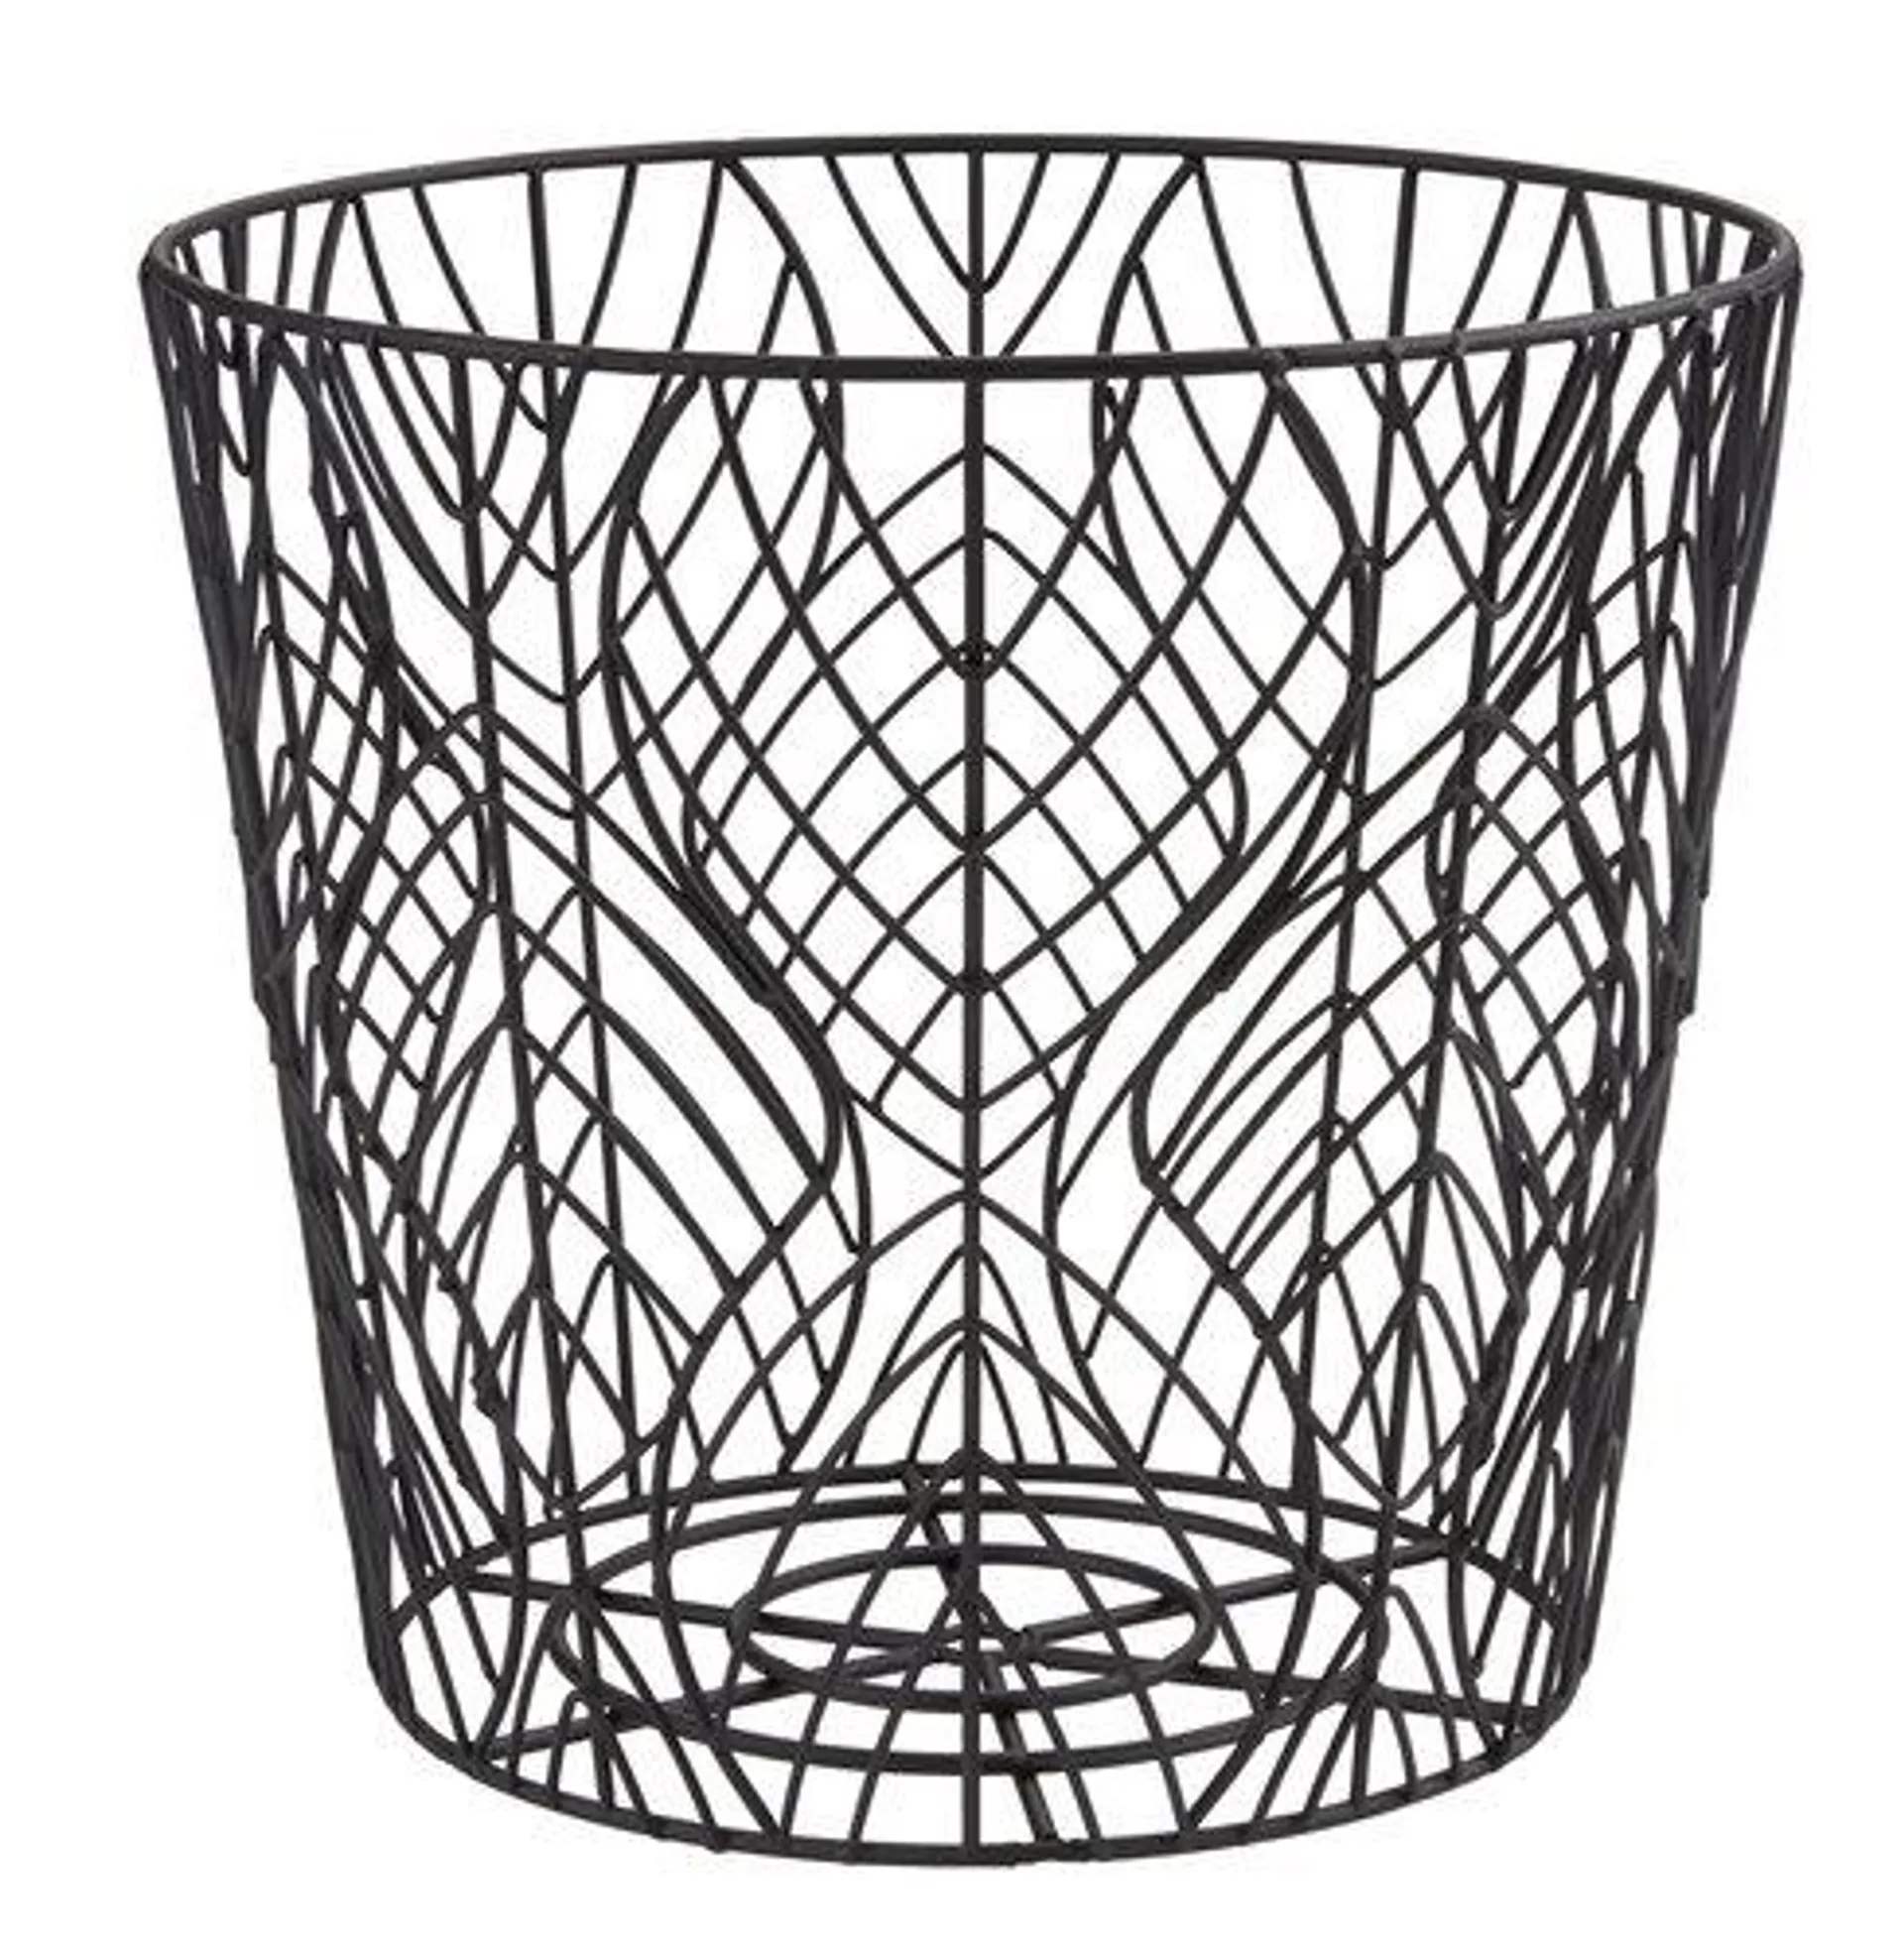 Storage basket ILSBO metal wire black